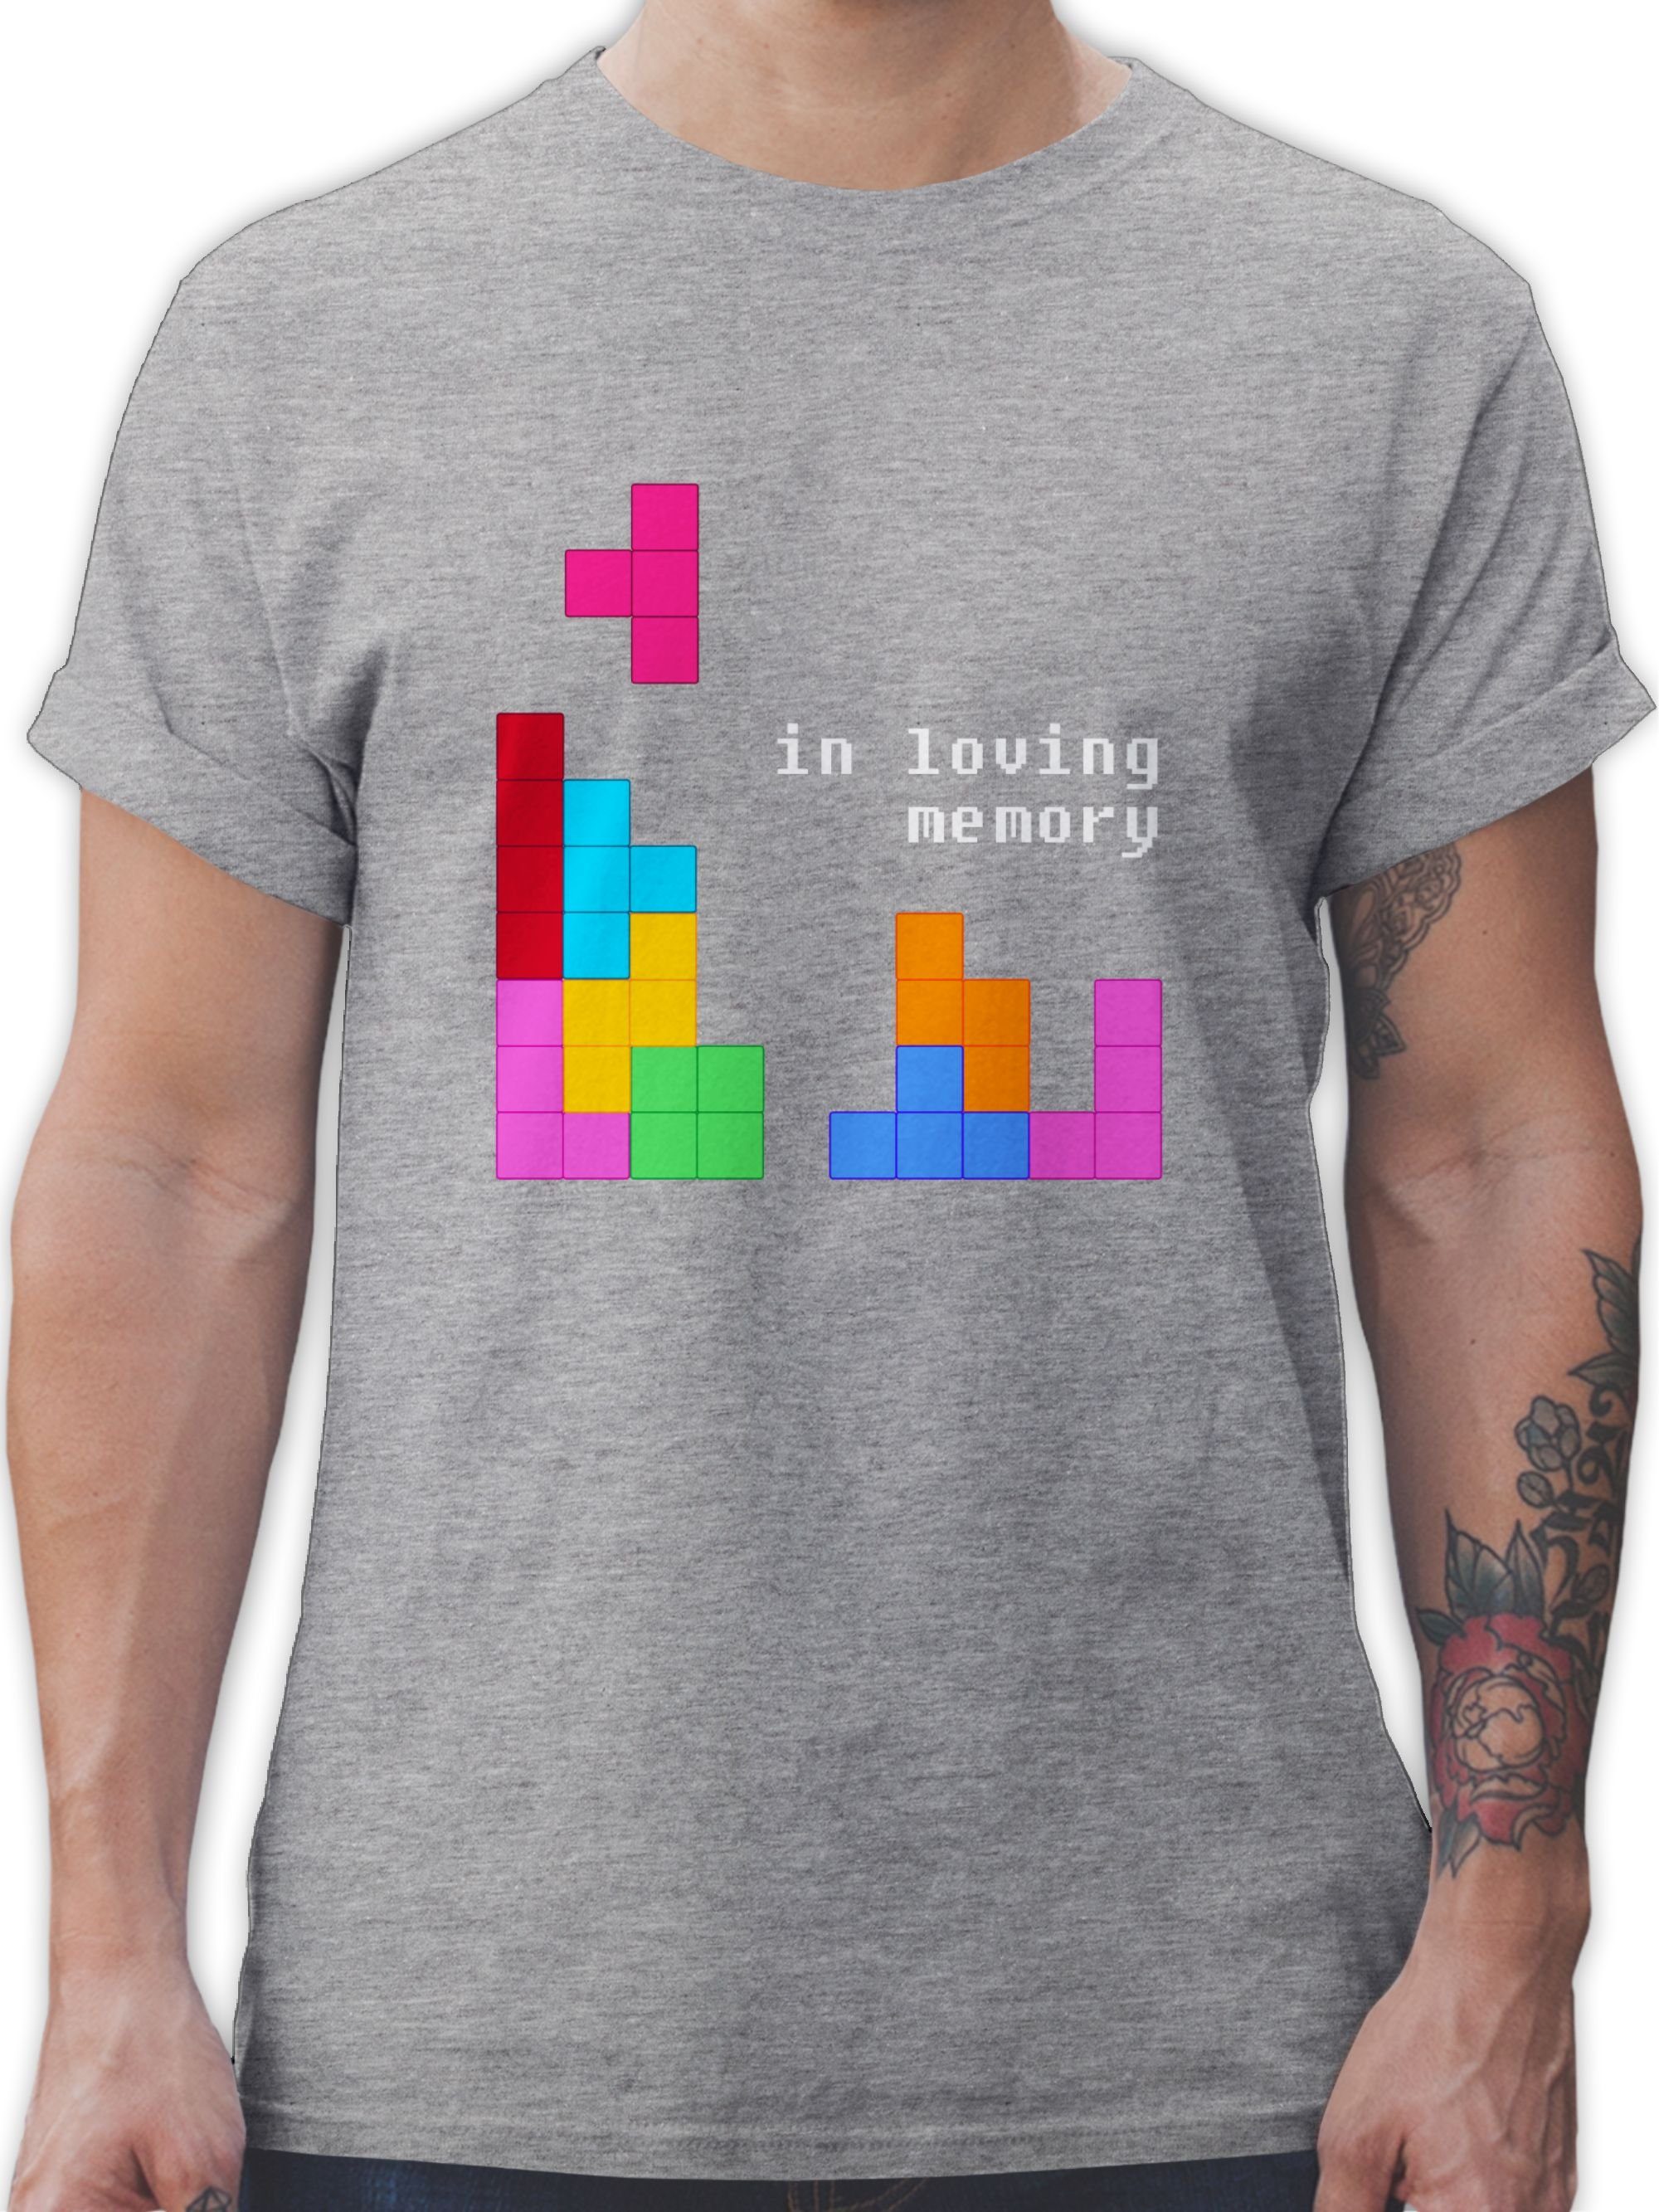 Shirtracer T-Shirt Tetris in loving memory Nerd Geschenke 3 Grau meliert